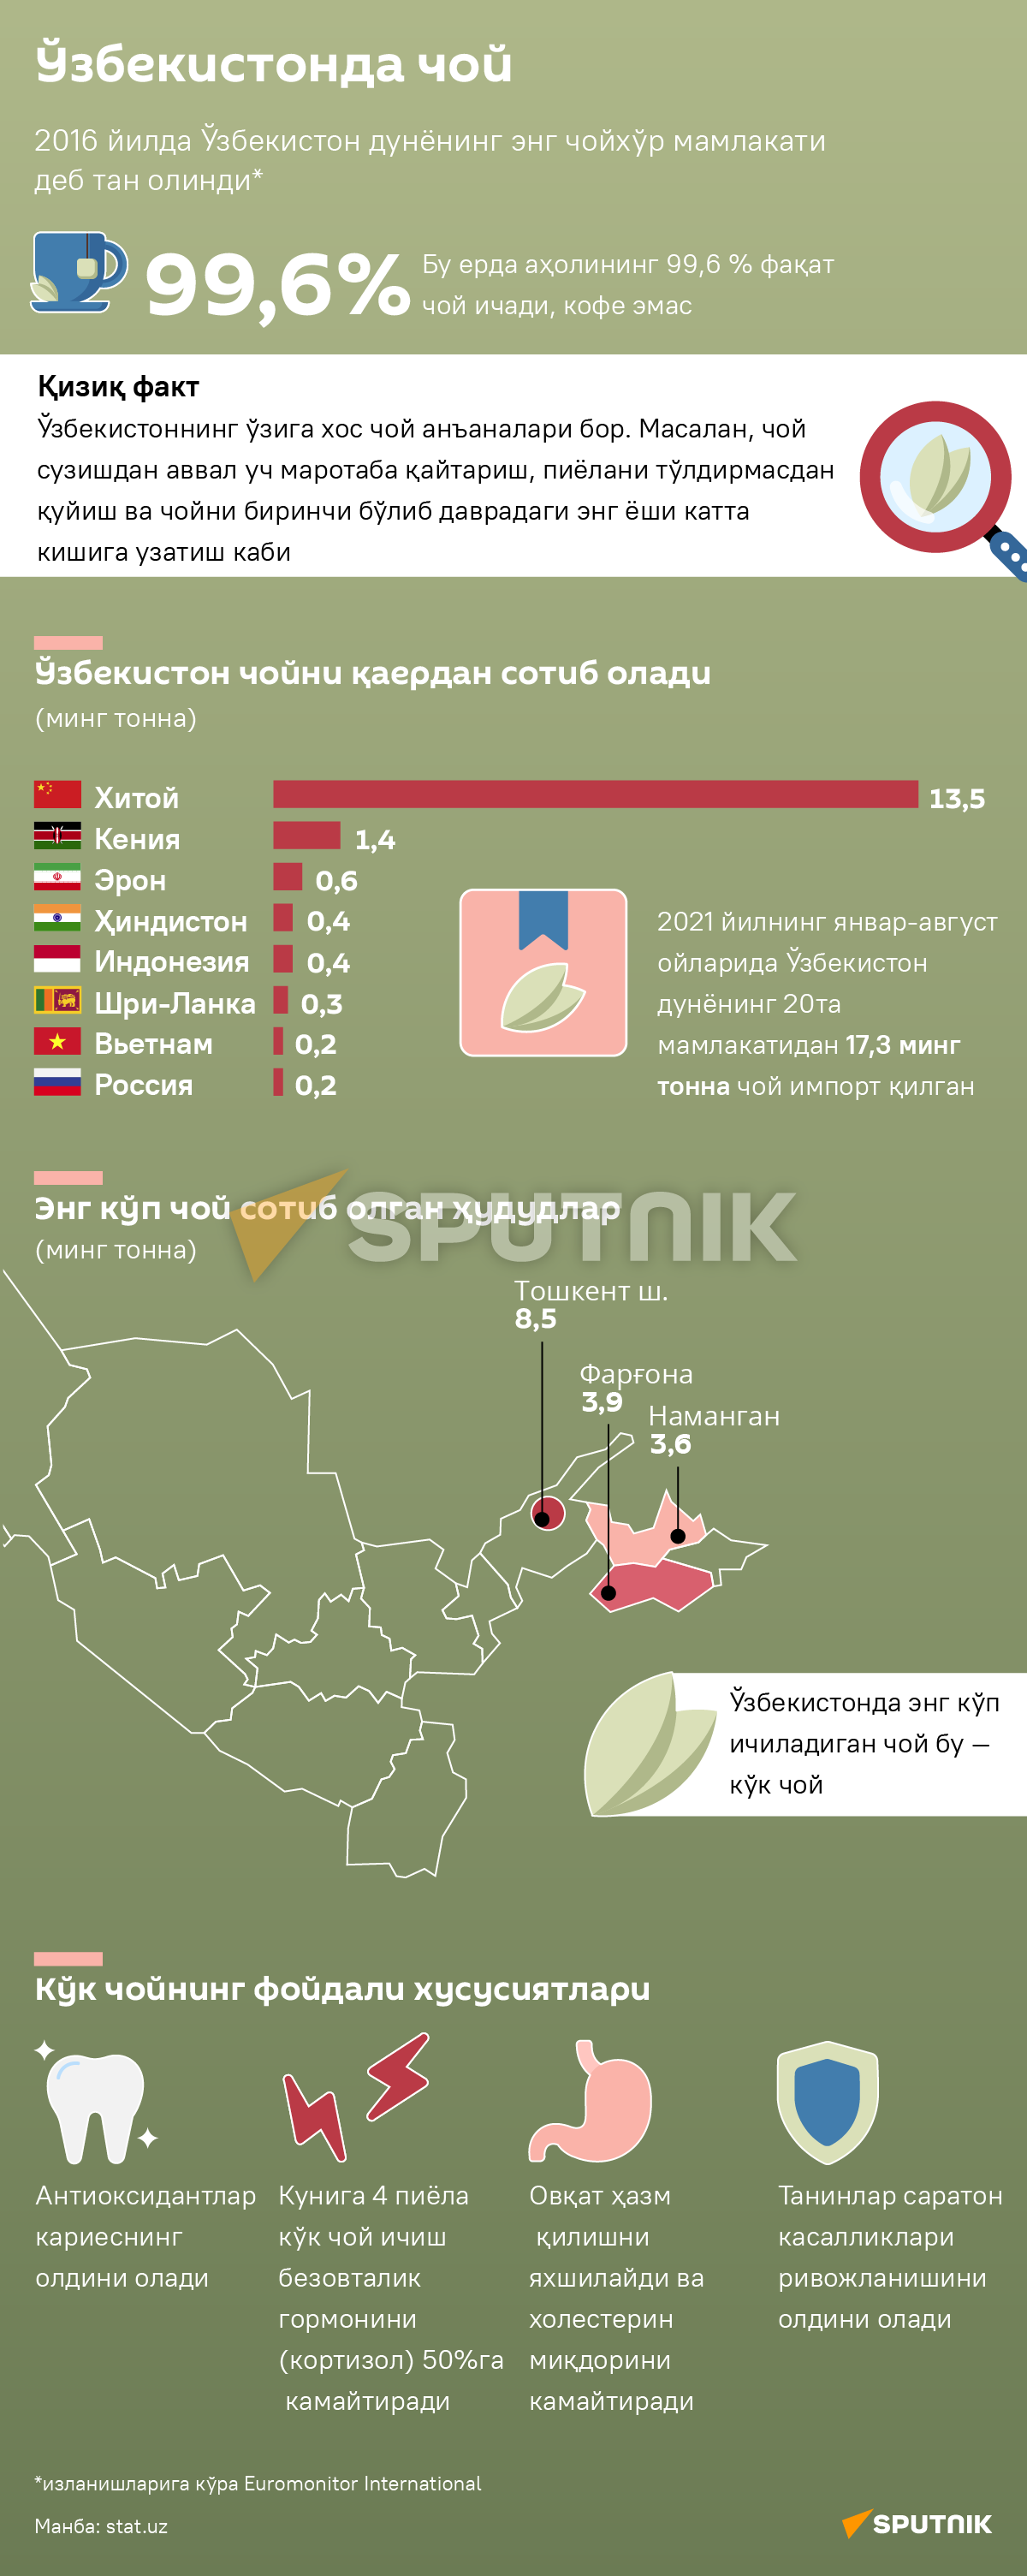 Чай в Узбекистане узб деск - Sputnik Ўзбекистон